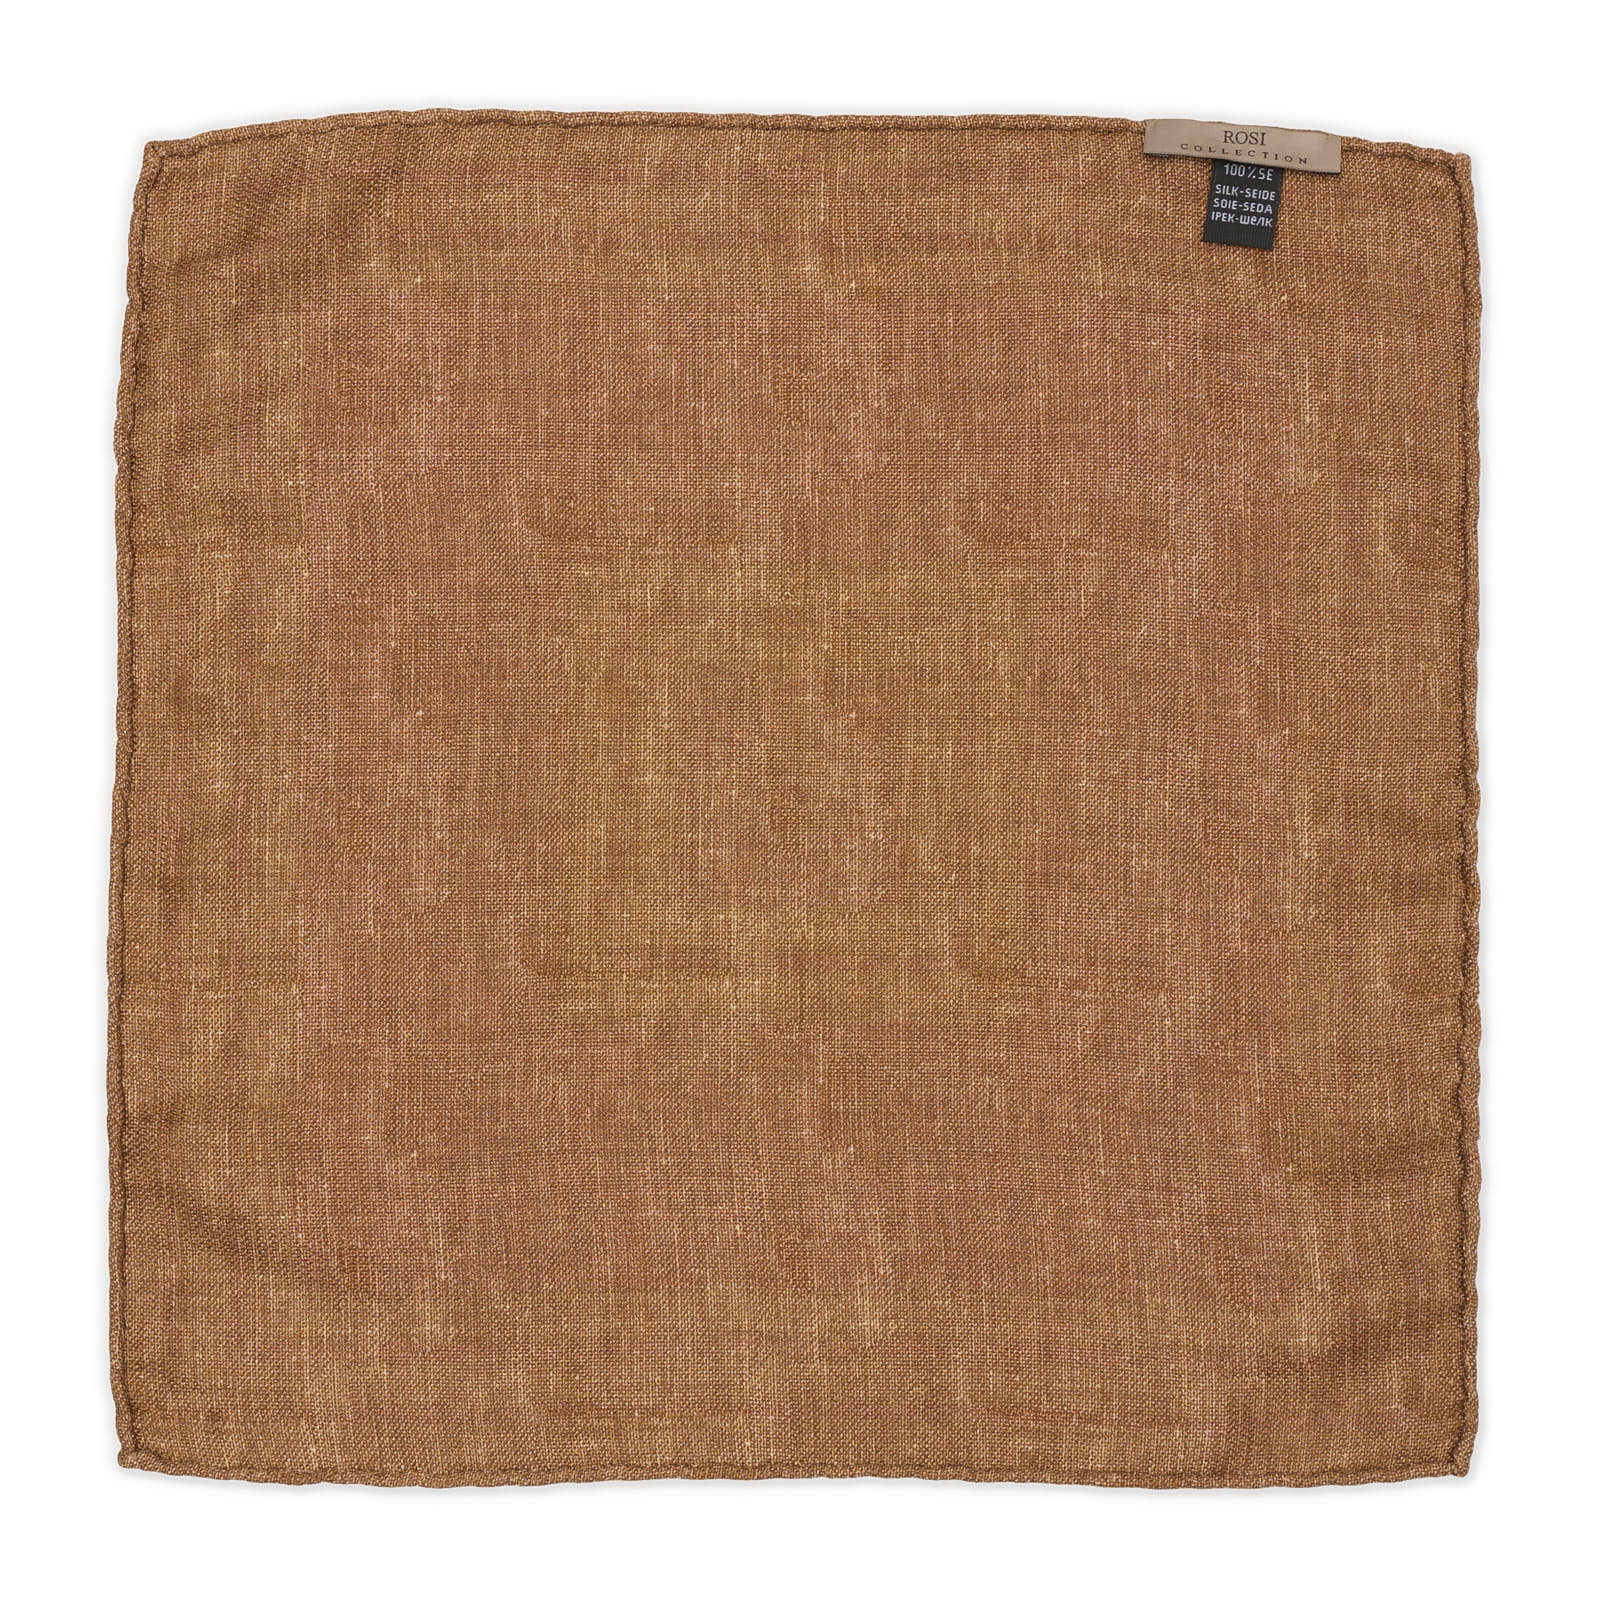 ROSI Handmade Burgundy-Brown Geometric-Solid Silk Pocket Square Double Sided